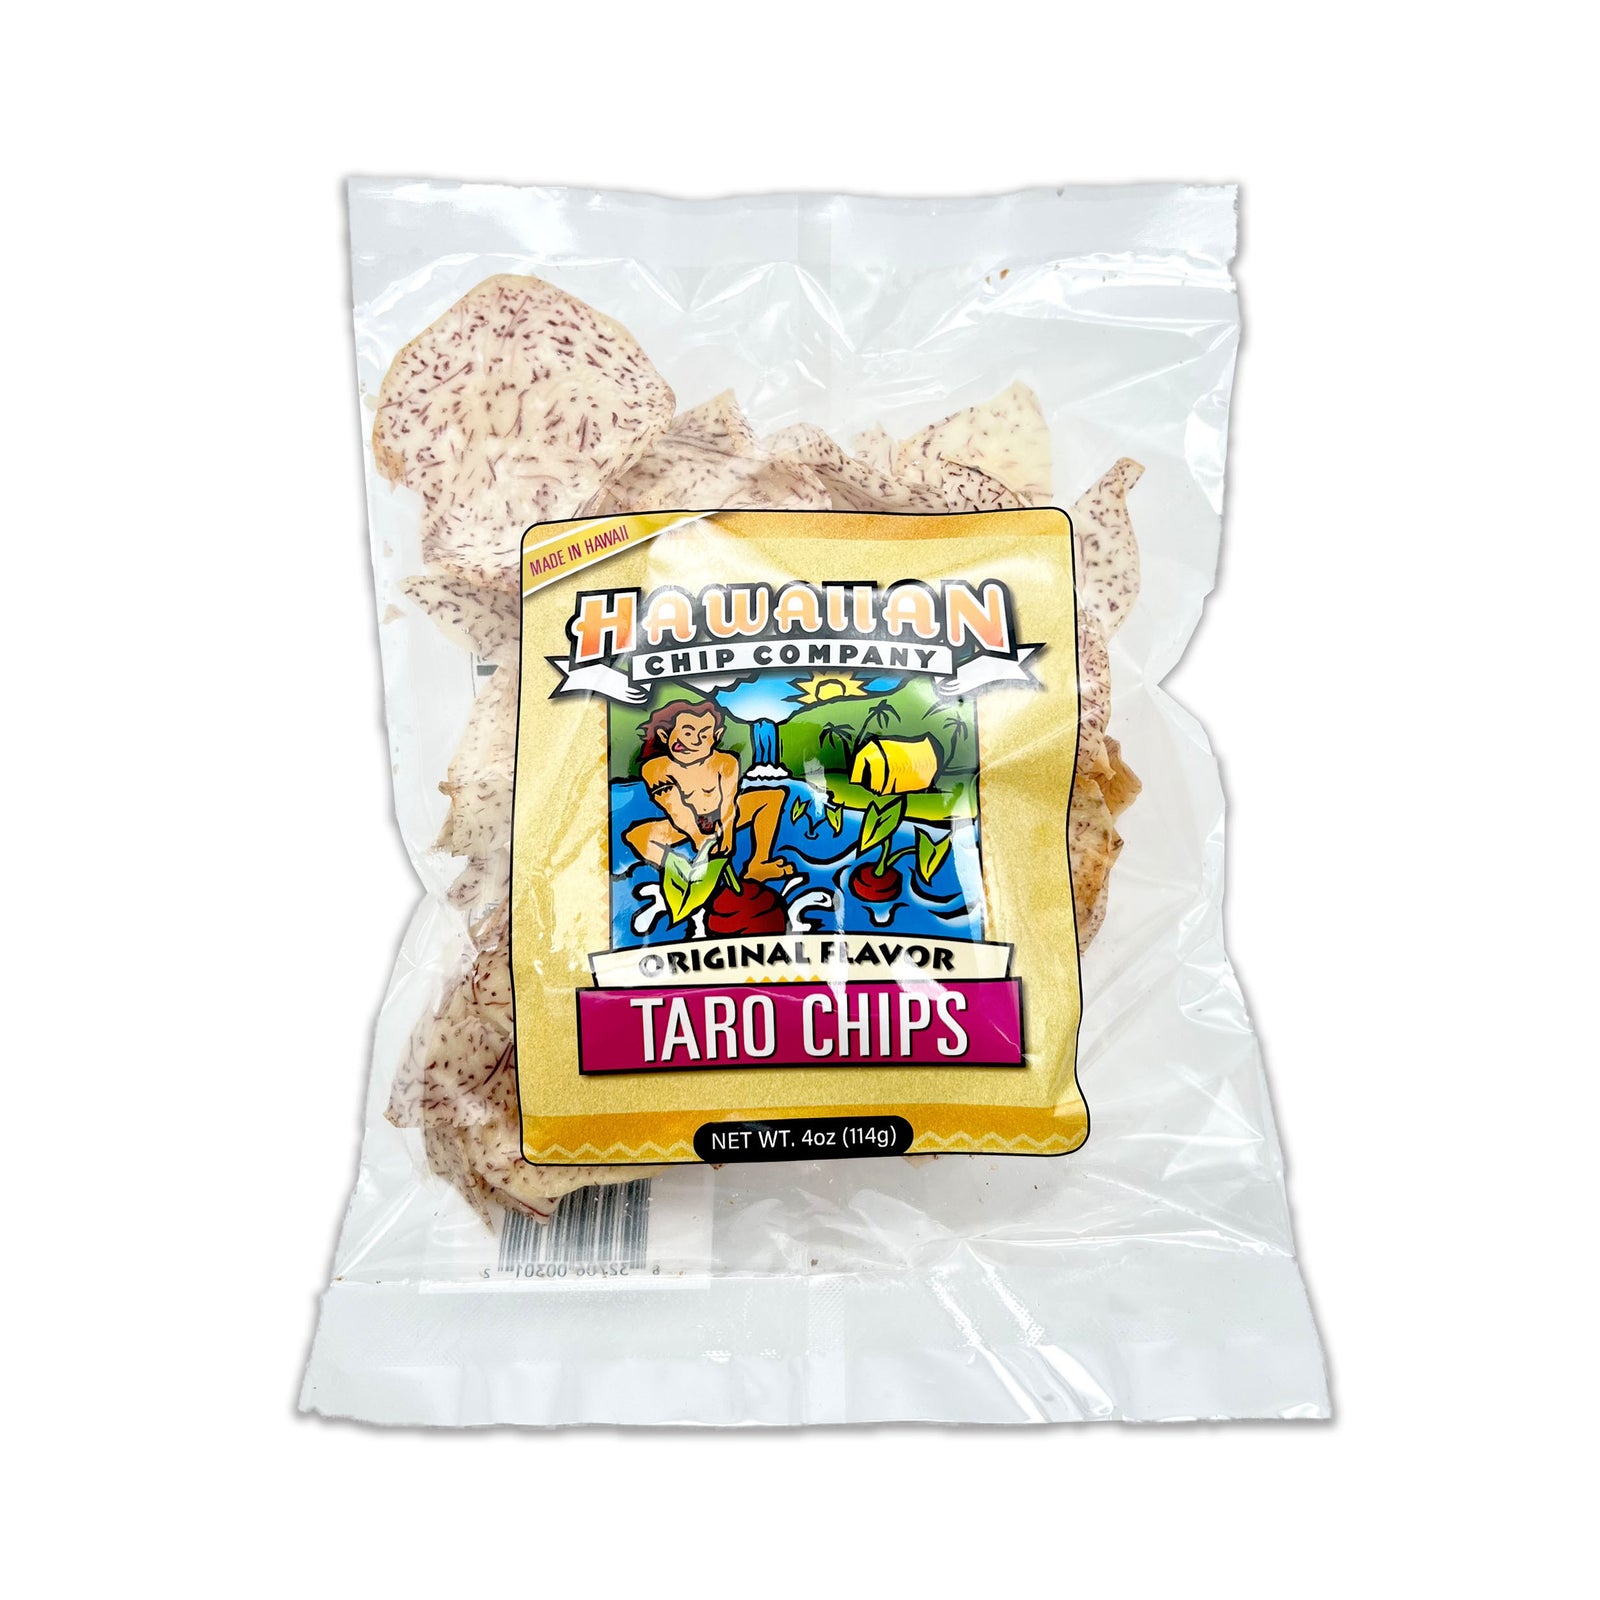 Pop-Up Mākeke - Hawaiian Chip Company - Original Flavor Taro Chips - Front View